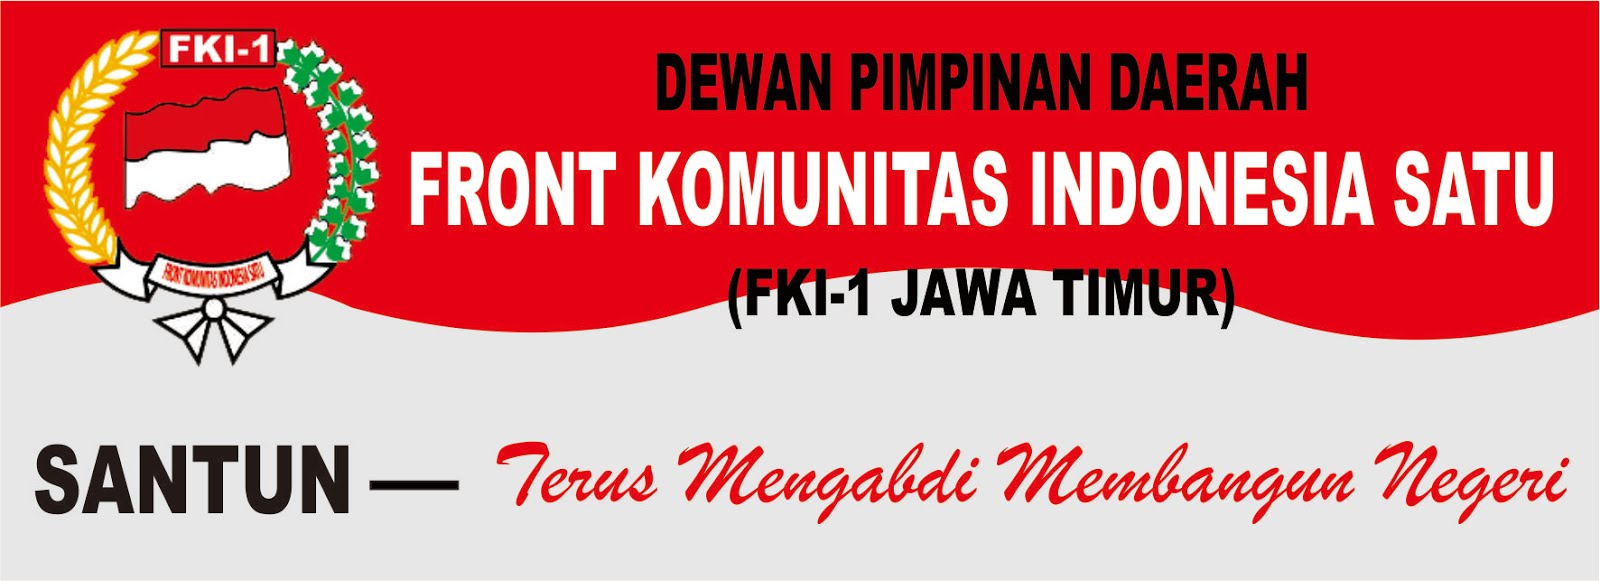 FKI-1 Jawa Timur